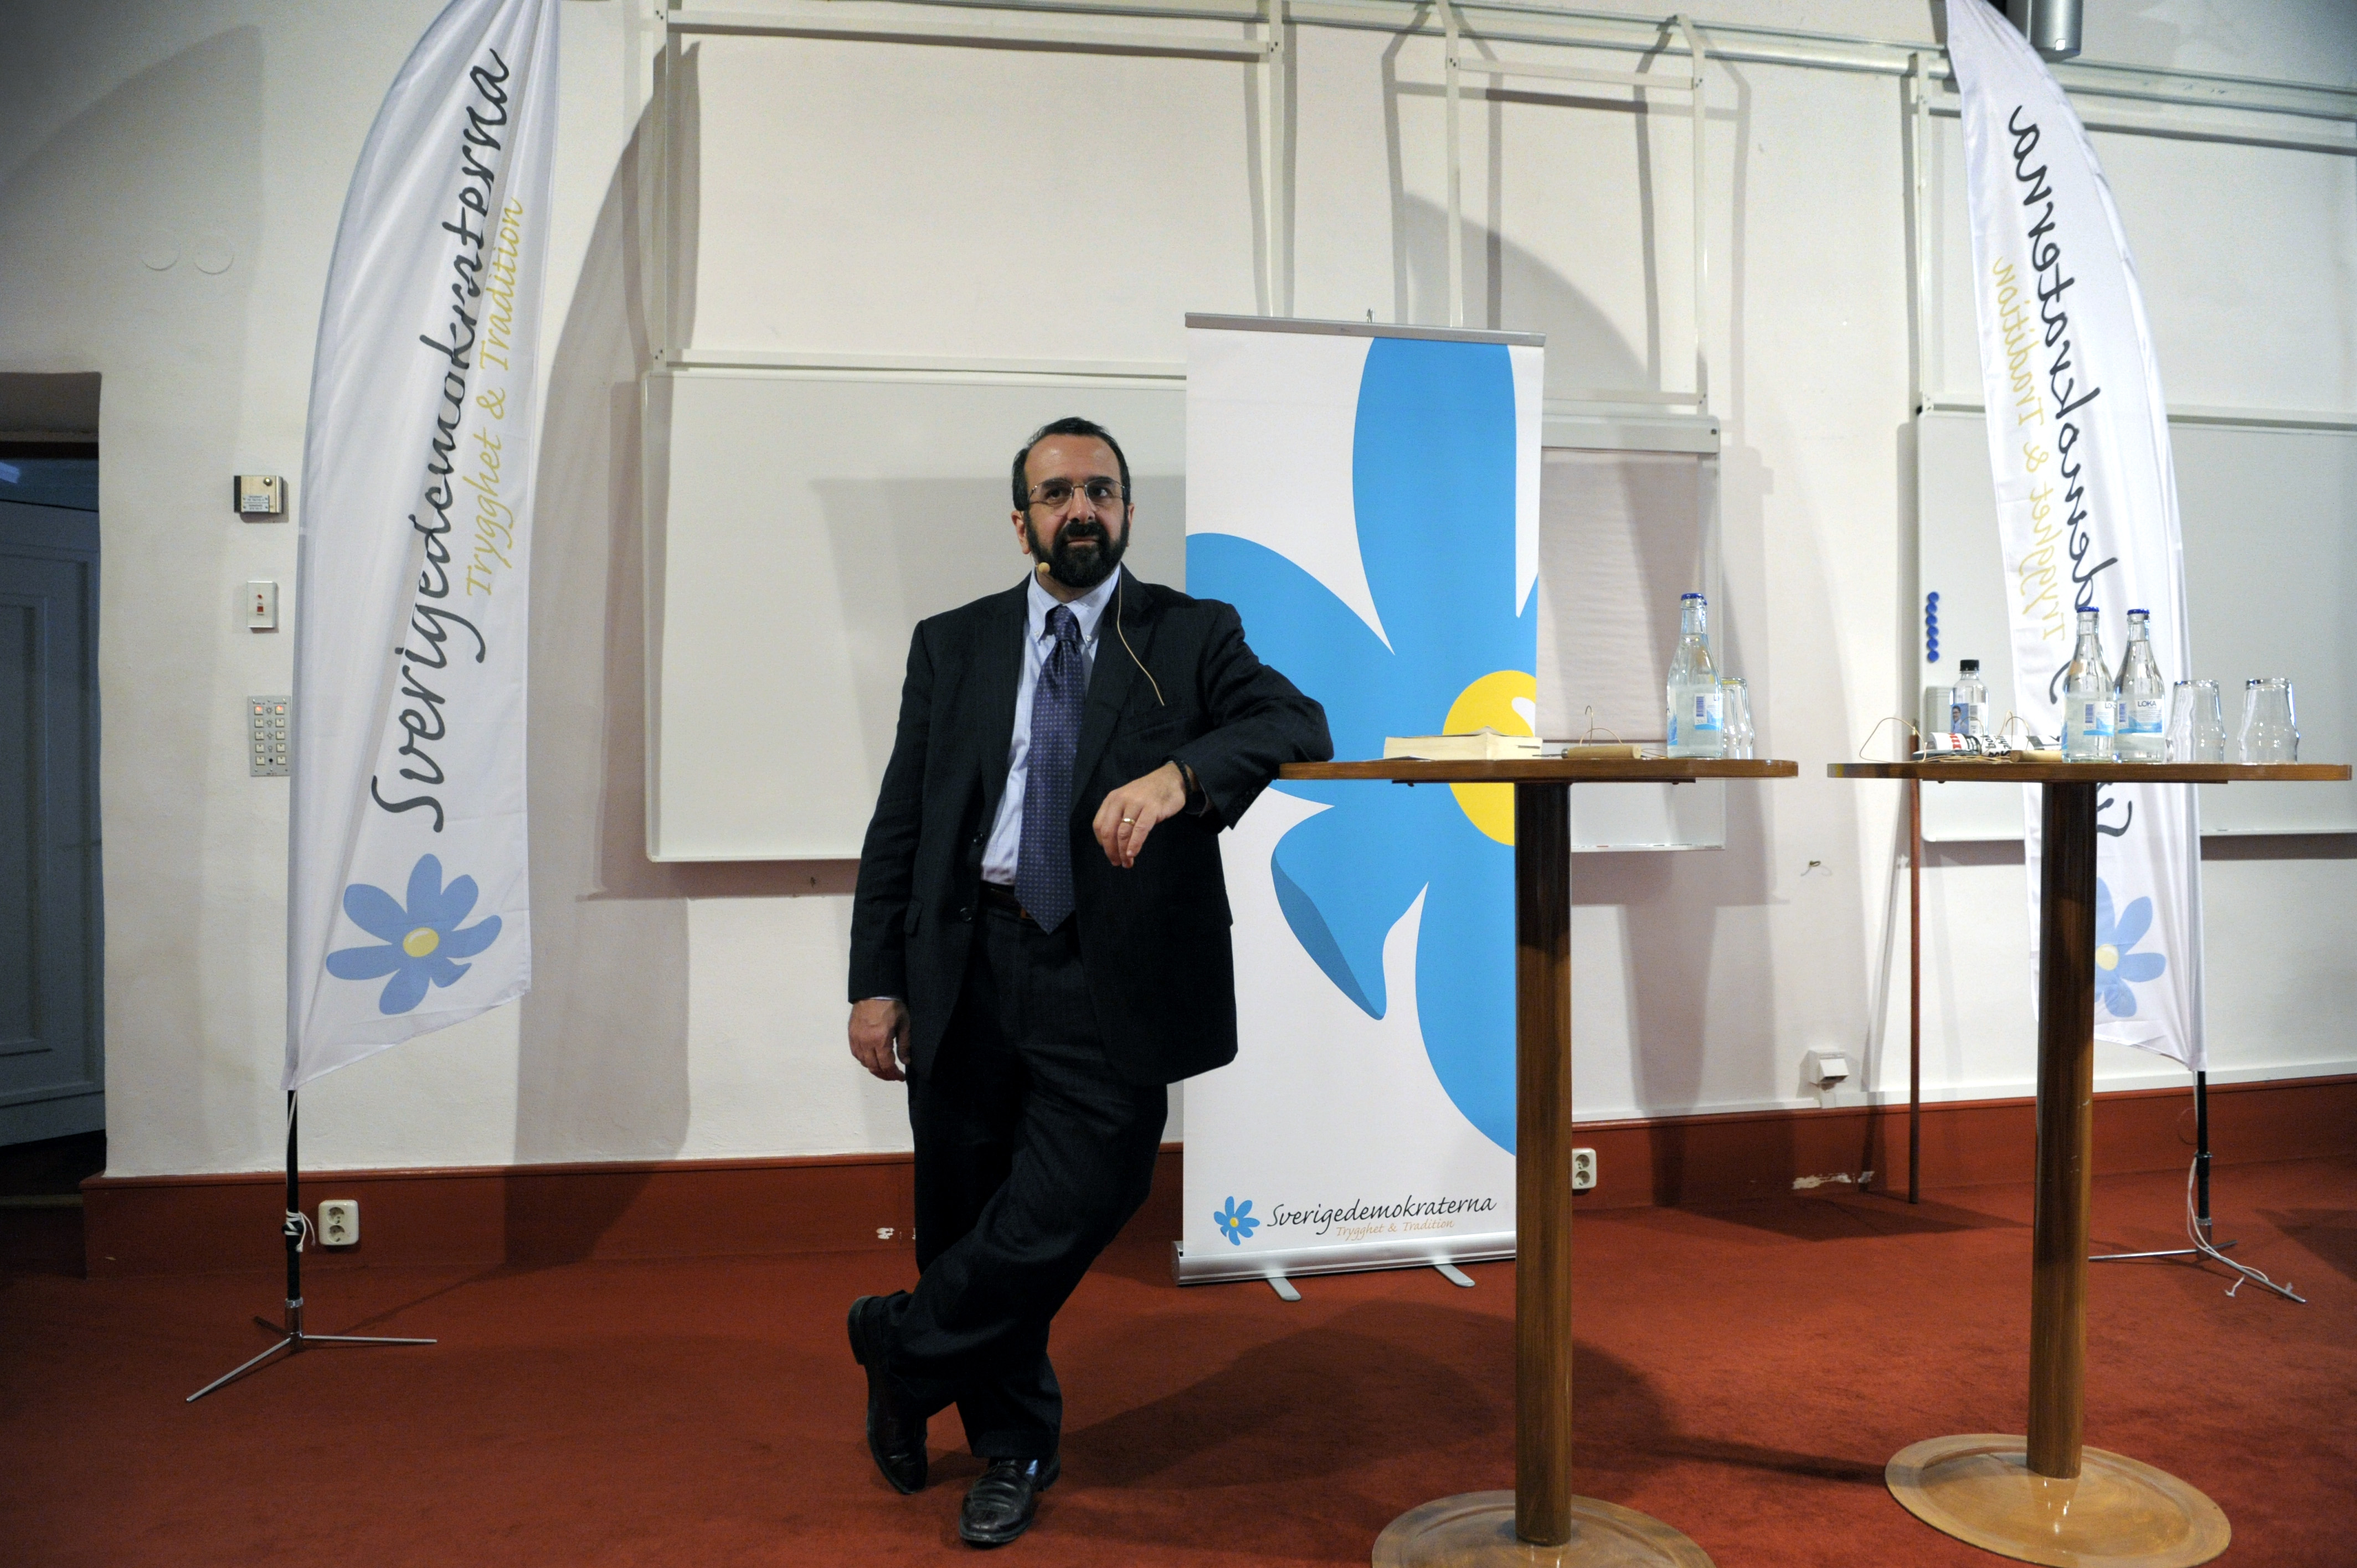 Riksdagsvalet 2010, Sverigedemokraterna, Robert Spencer, Almedalen, Islam